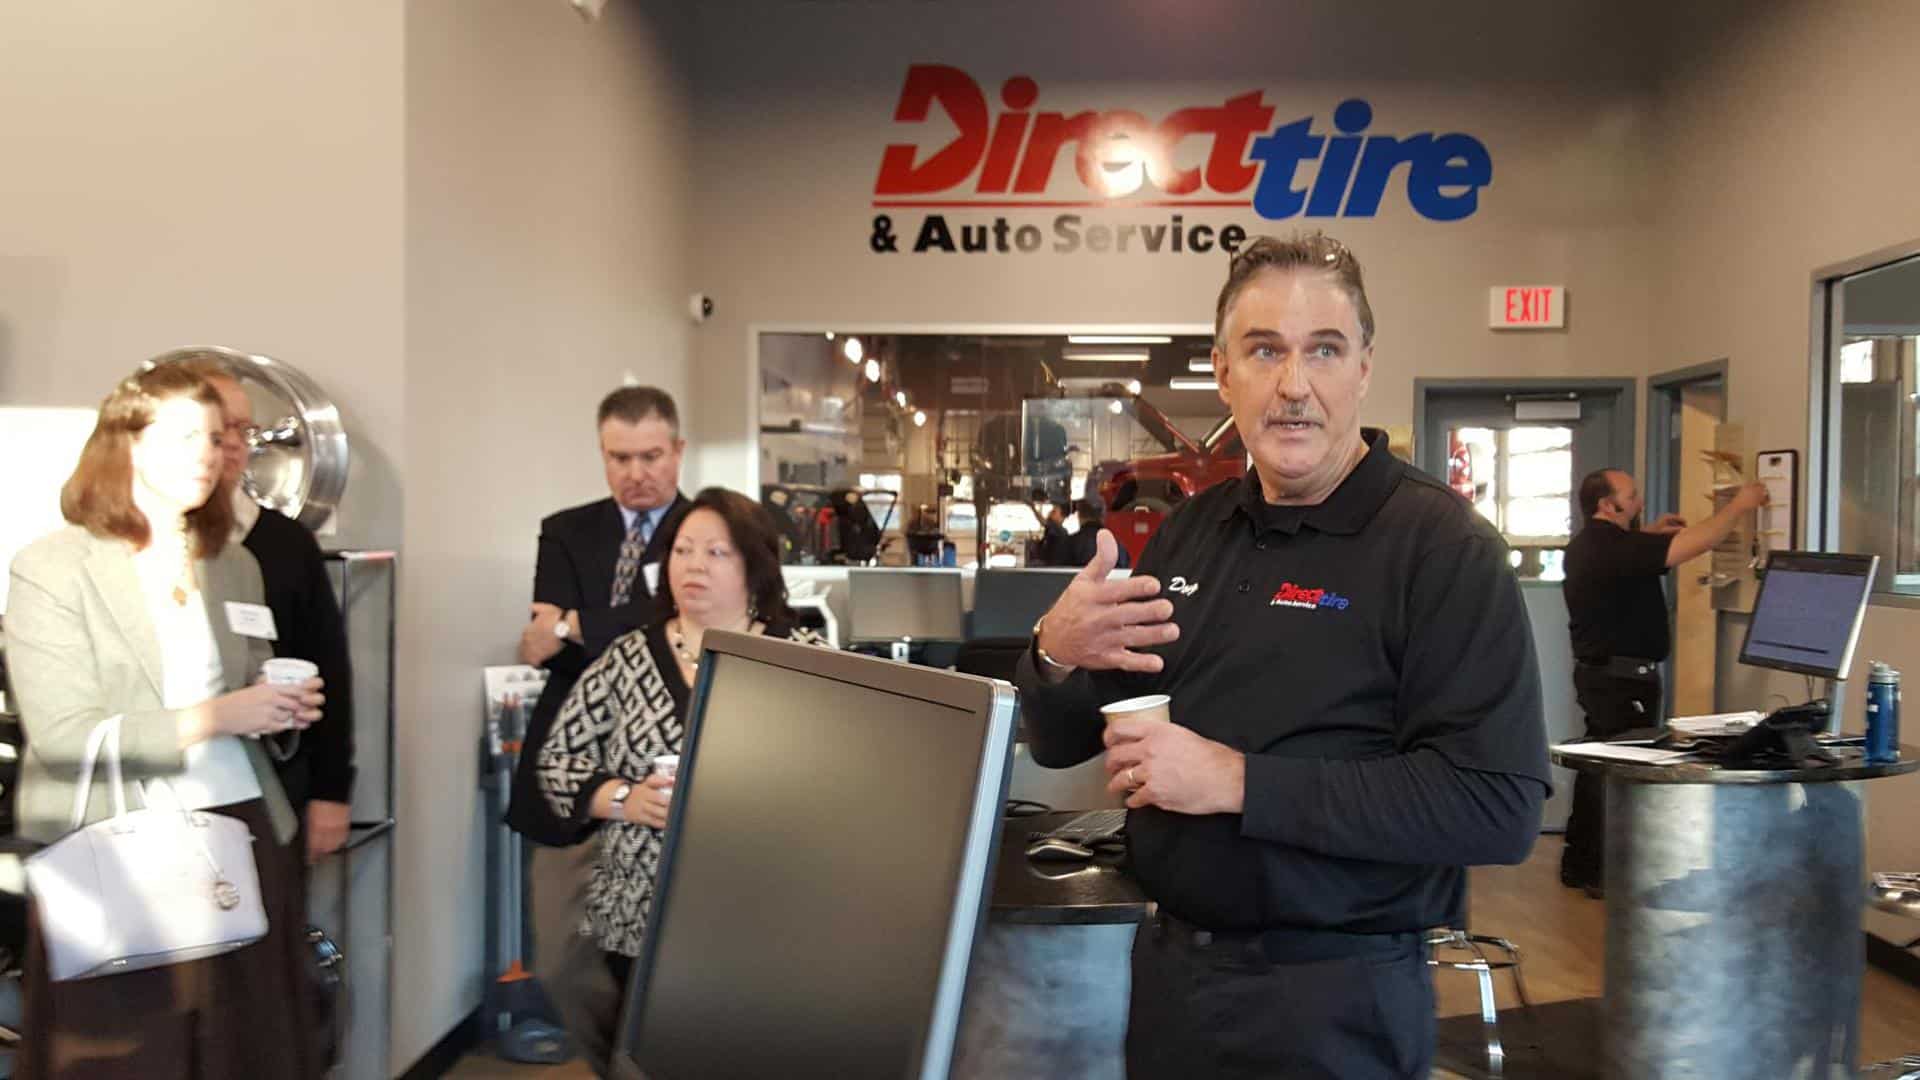 Doug Smith of Direct Tire